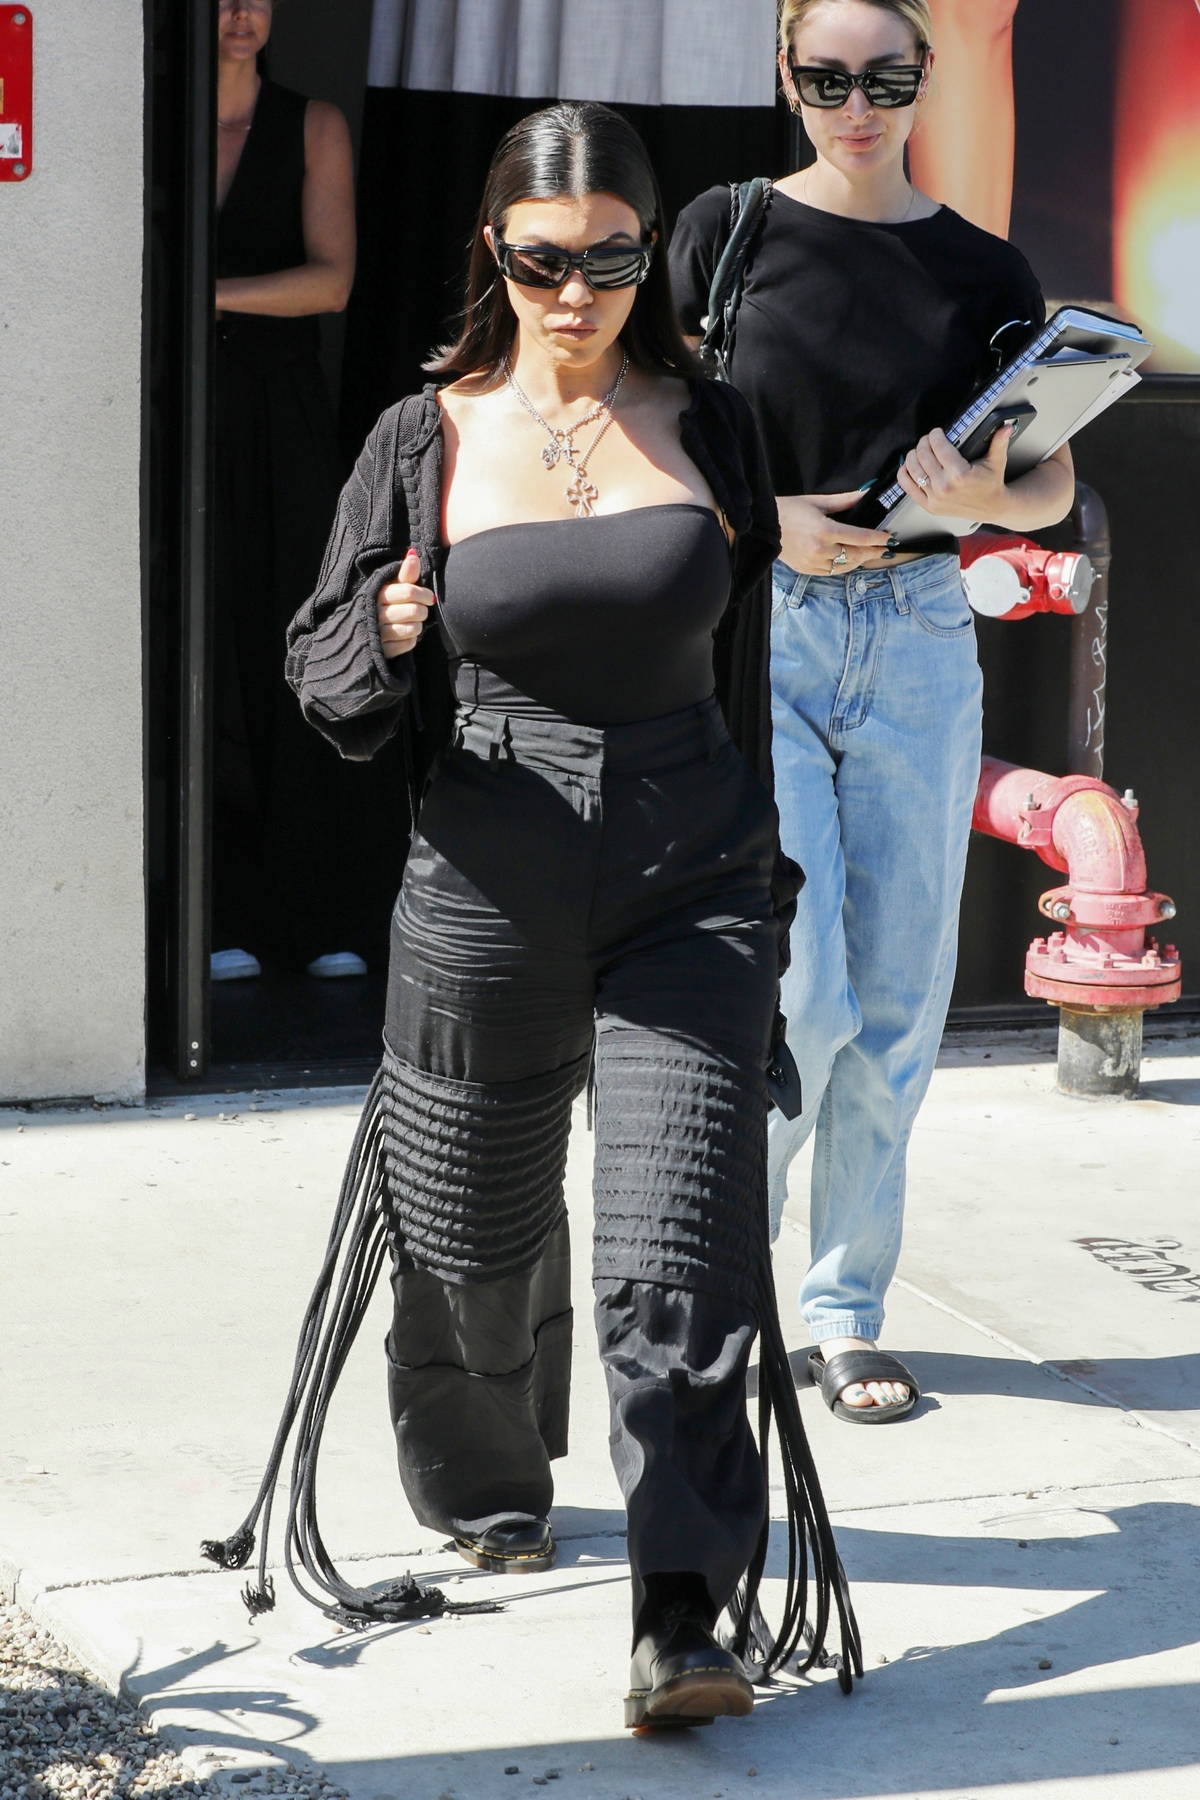 Kourtney Kardashian dons all-black as she leaves after a